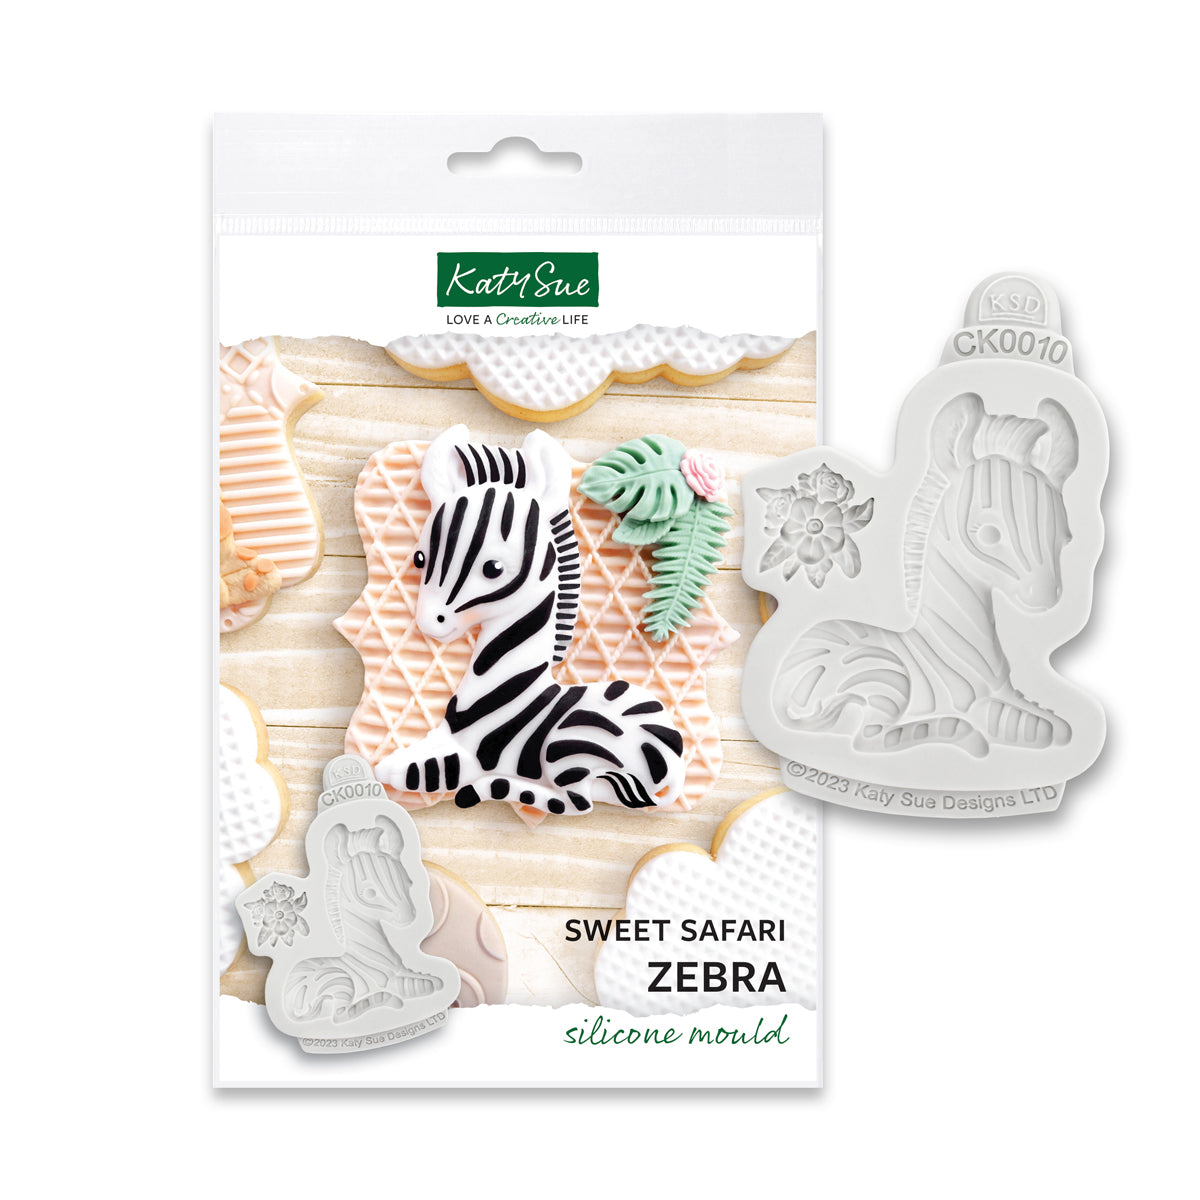 Sweet Safari Zebra Silicone Mould